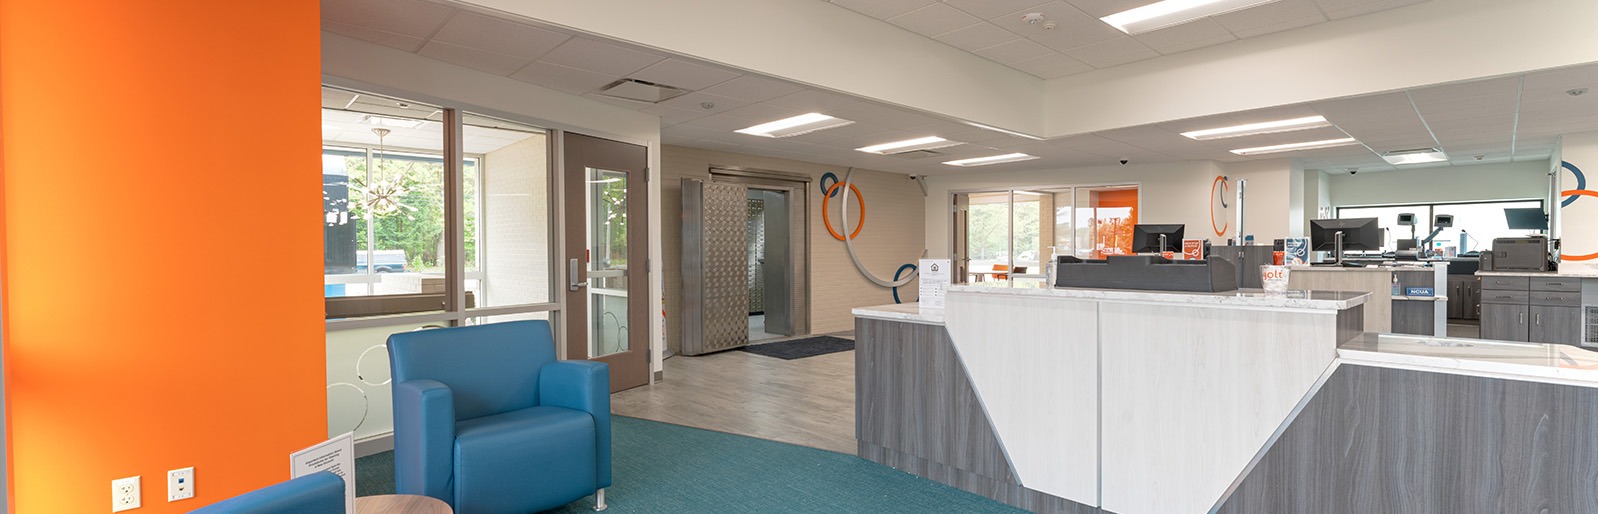 The interior reception area of Jolt Credit Union in Midland, Michigan.